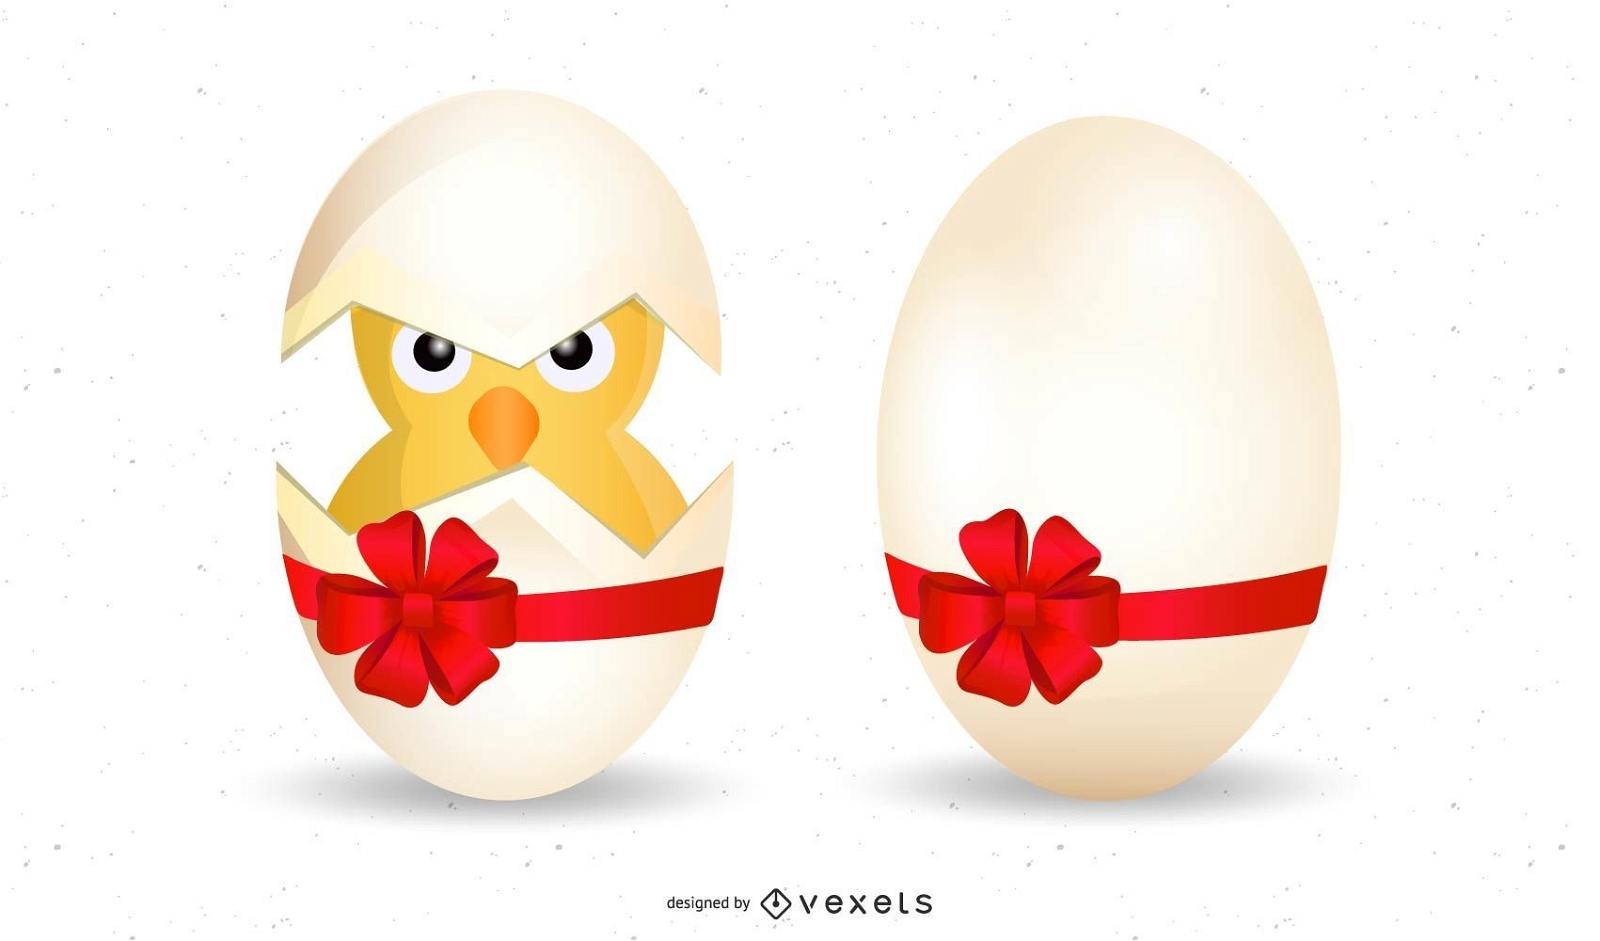 Broken Egg with Chick Inside